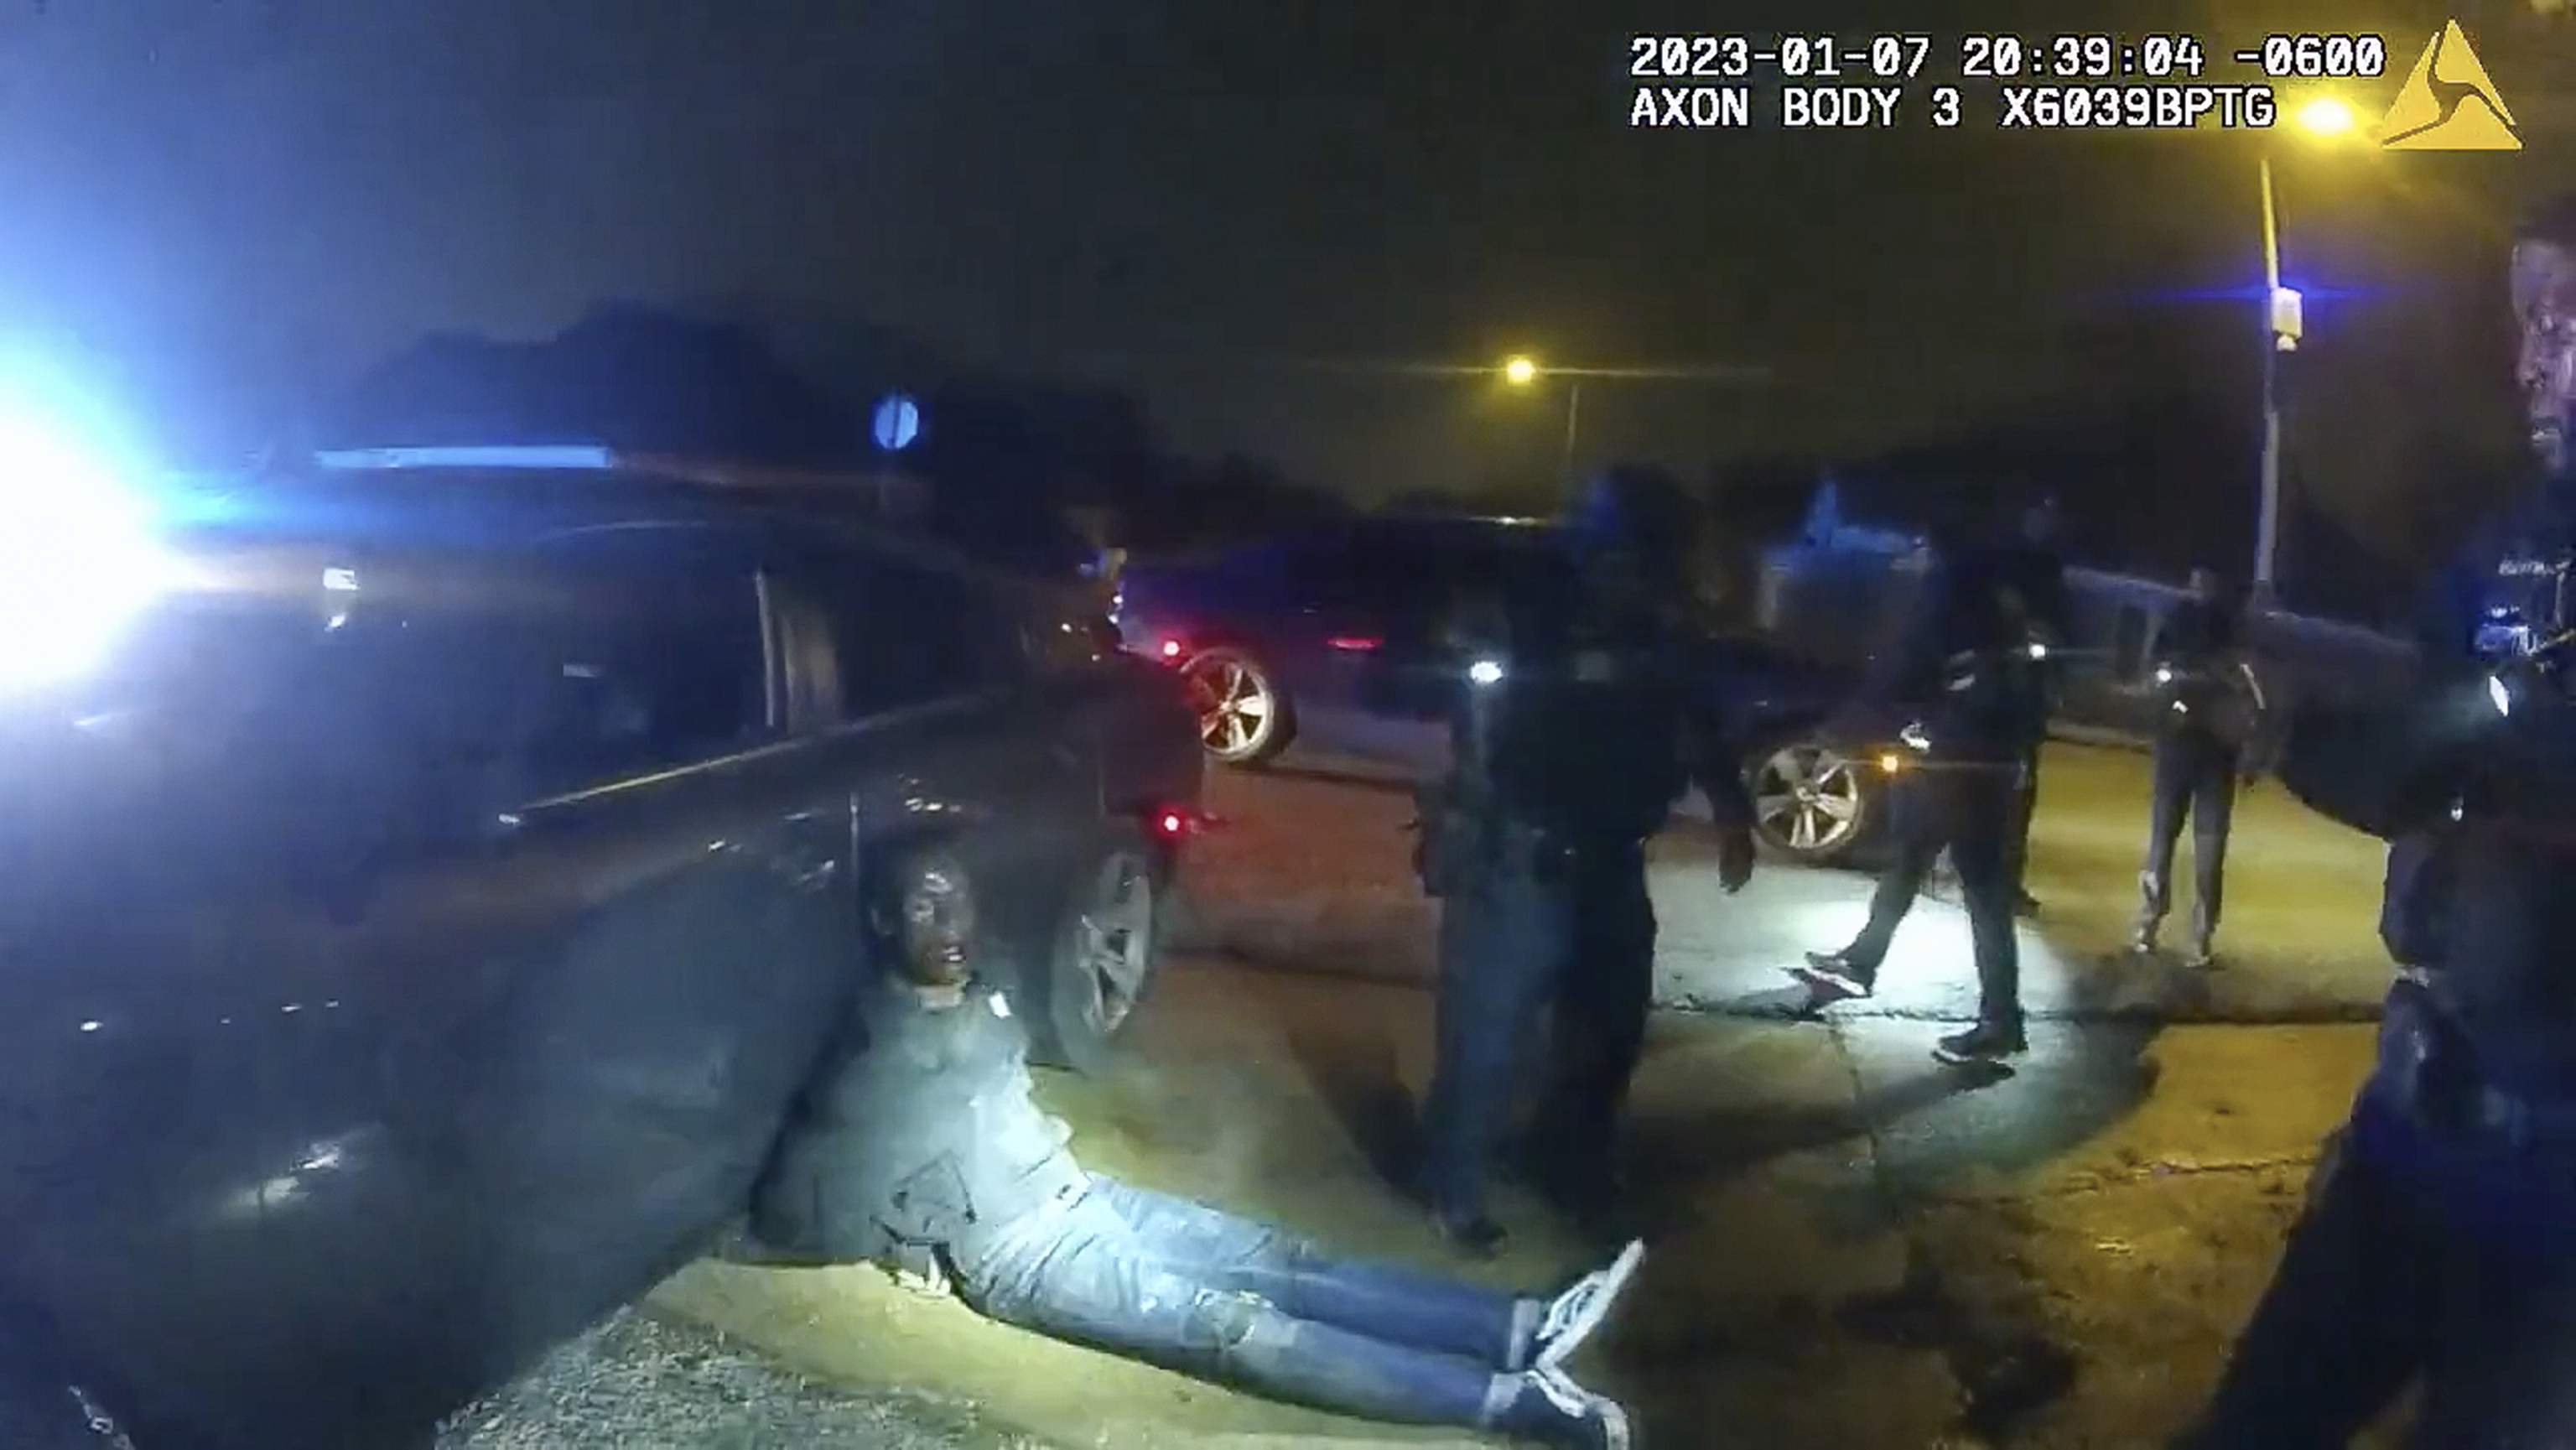 Destituyen a un sexto policía por la brutal paliza mortal a Tyre Nichols en Memphis